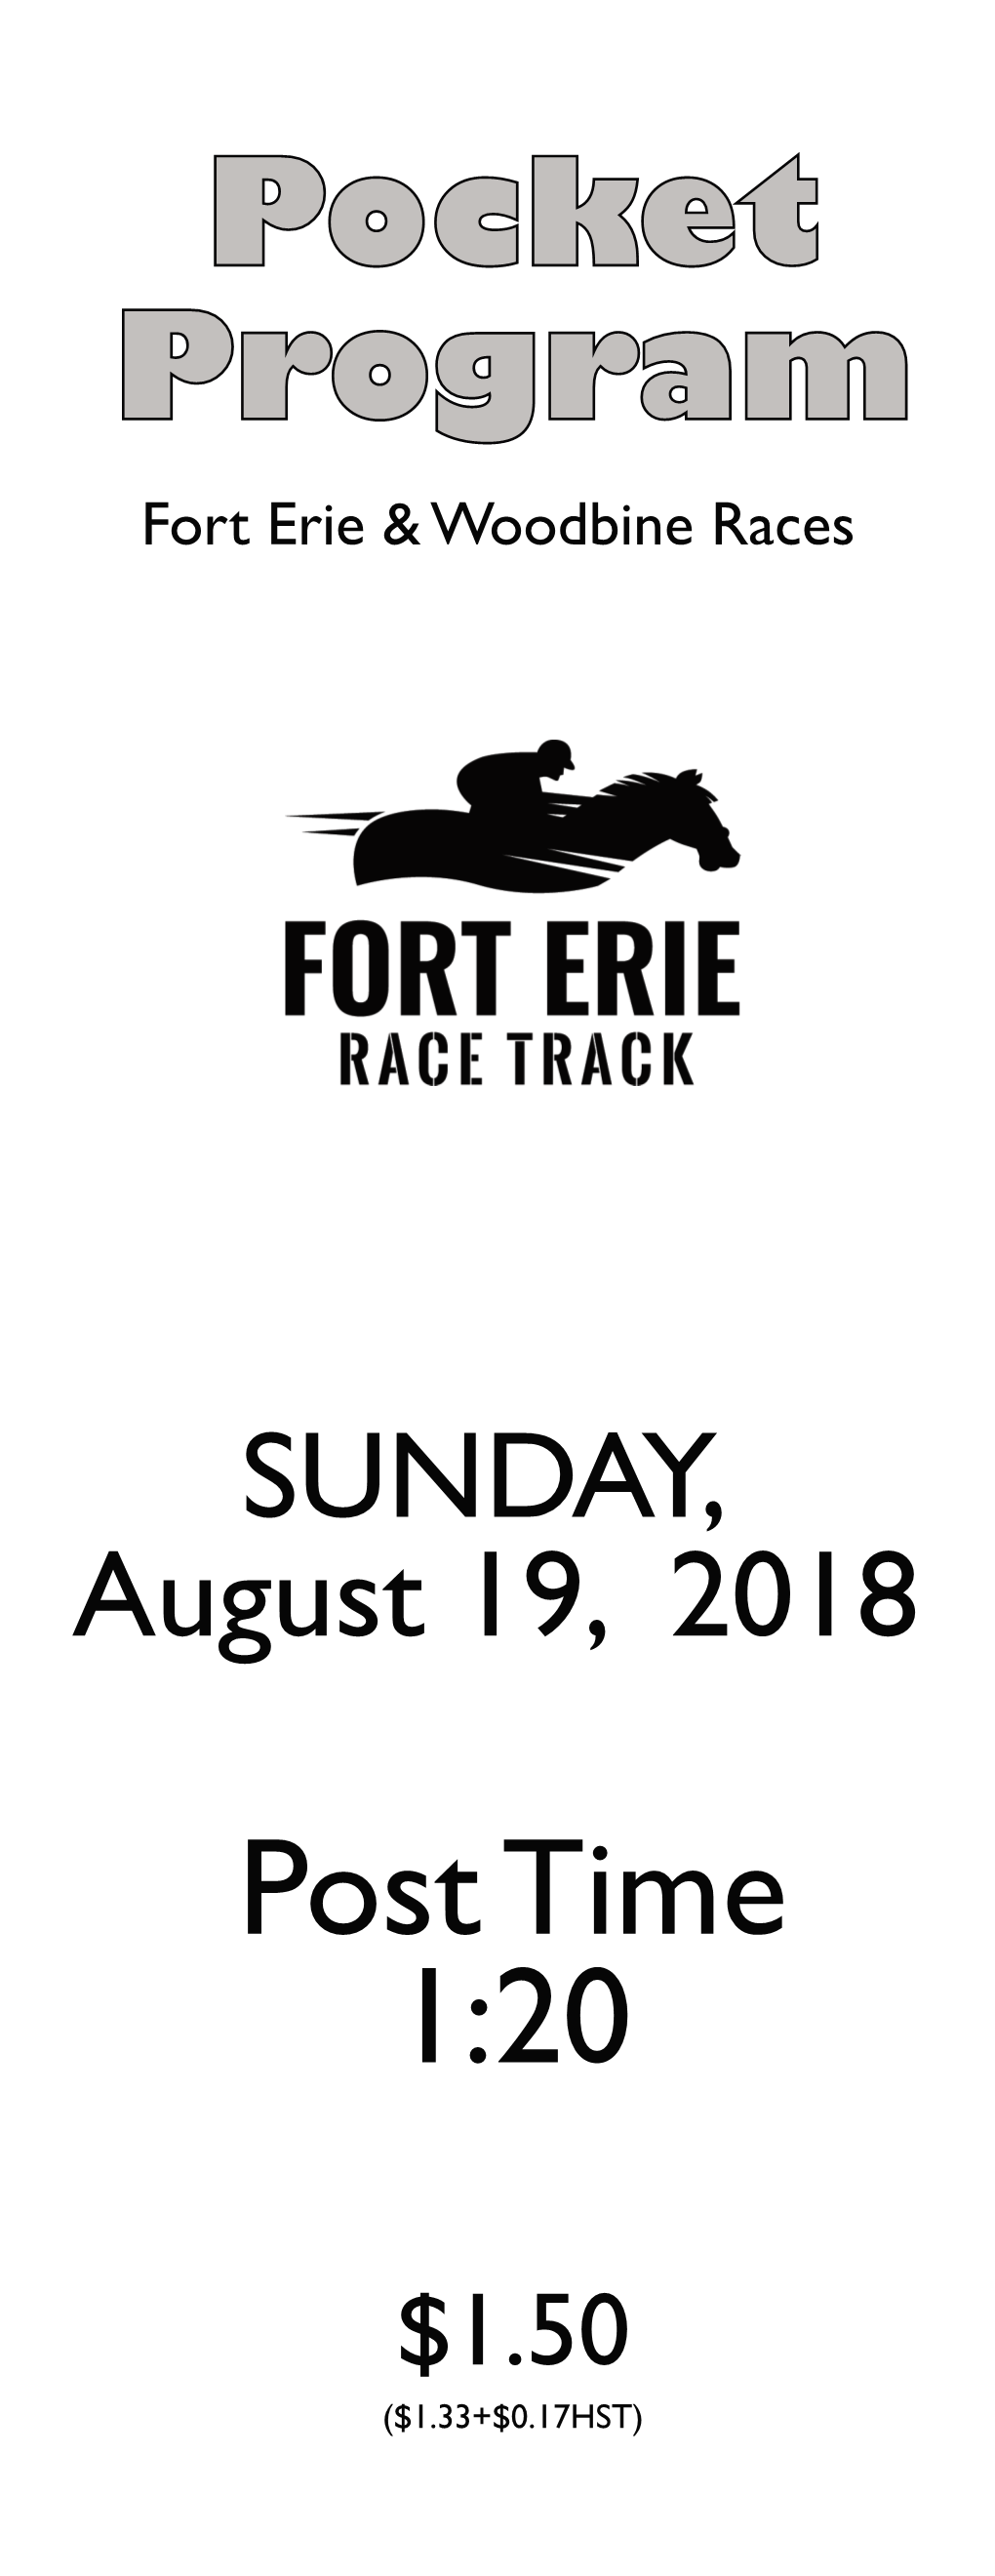 Pocket Program Fort Erie & Woodbine Races